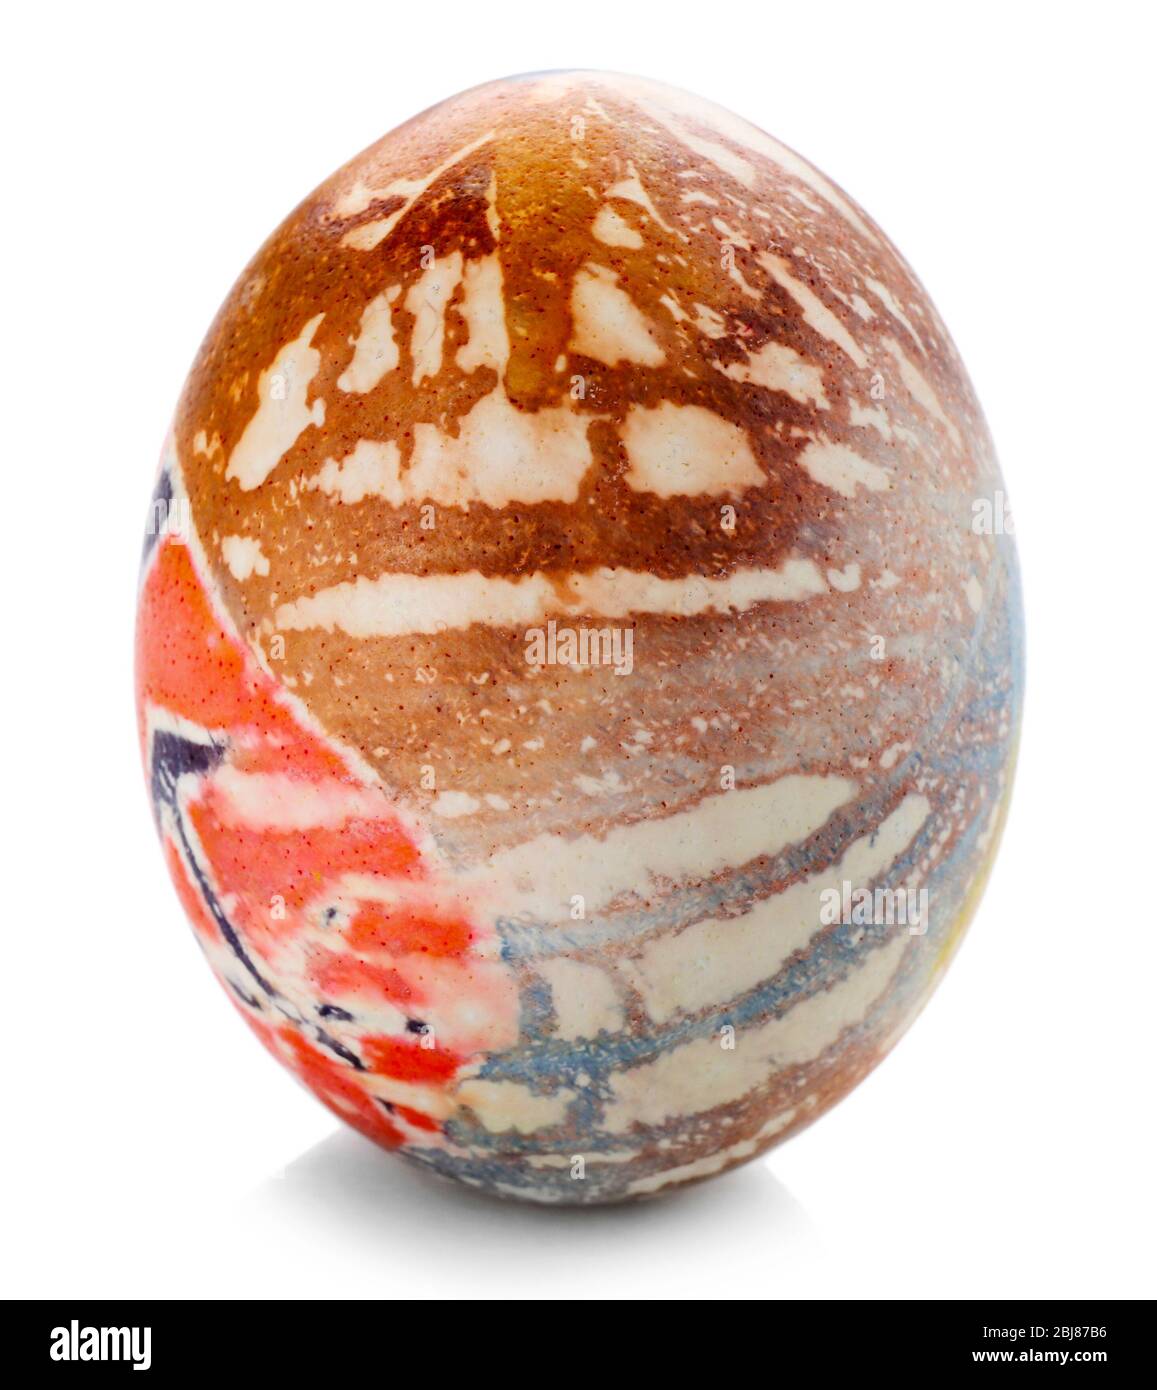 Easter egg isolated on white background Stock Photo